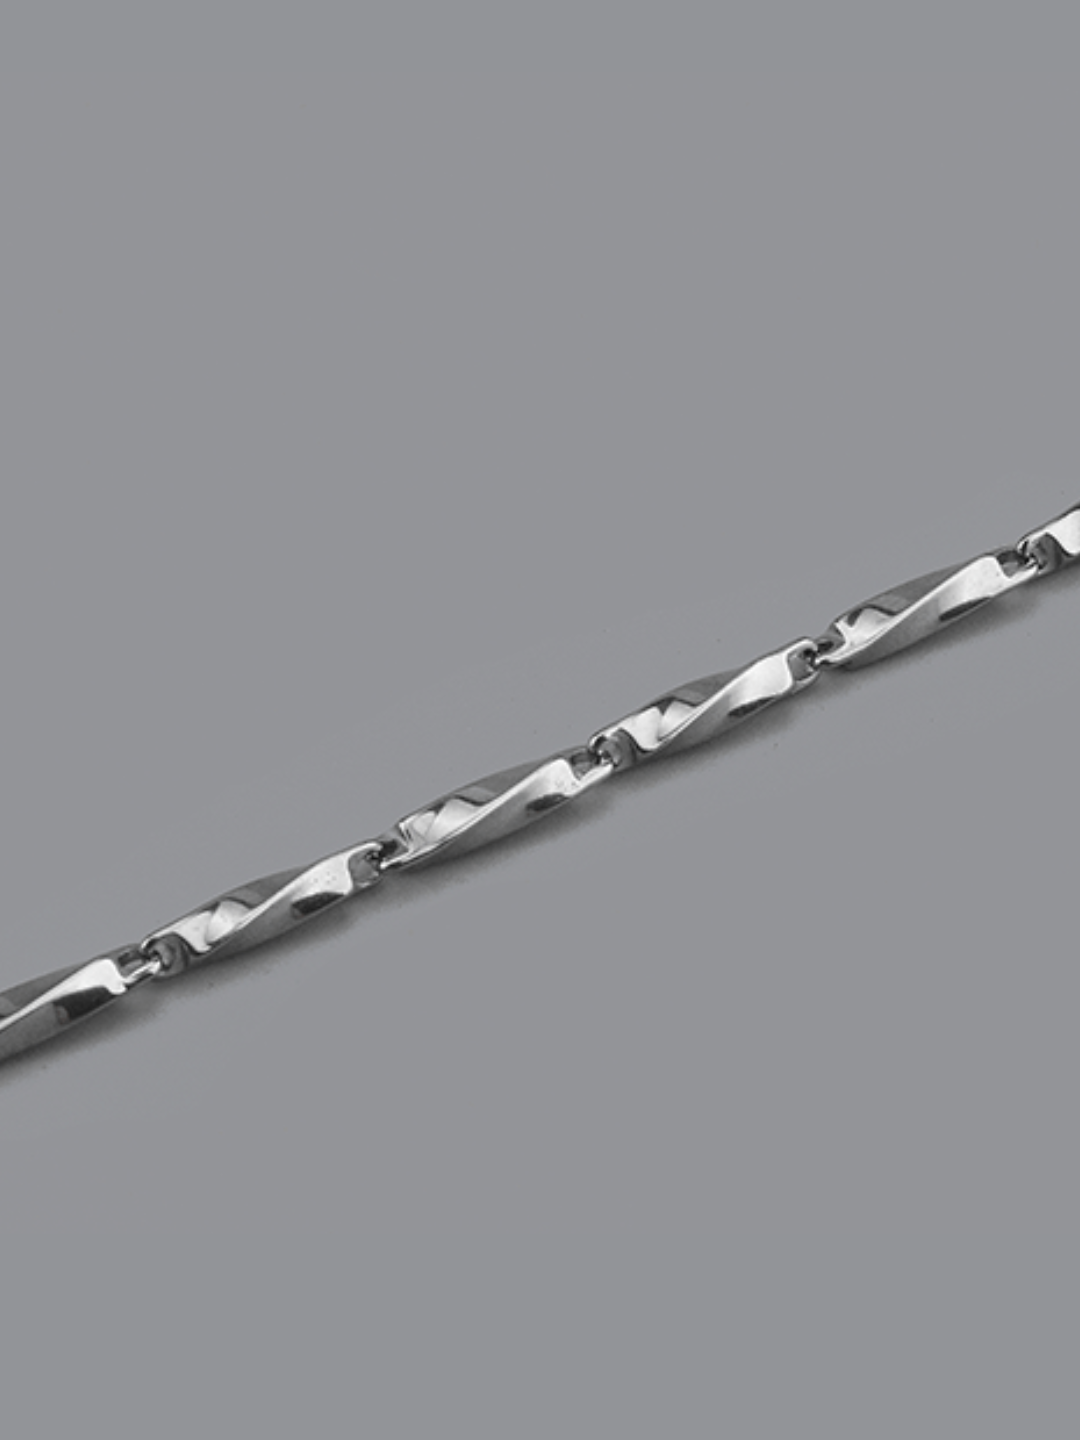 【ZXS】New Mobius Spiral Titanium Steel Necklace  AR91